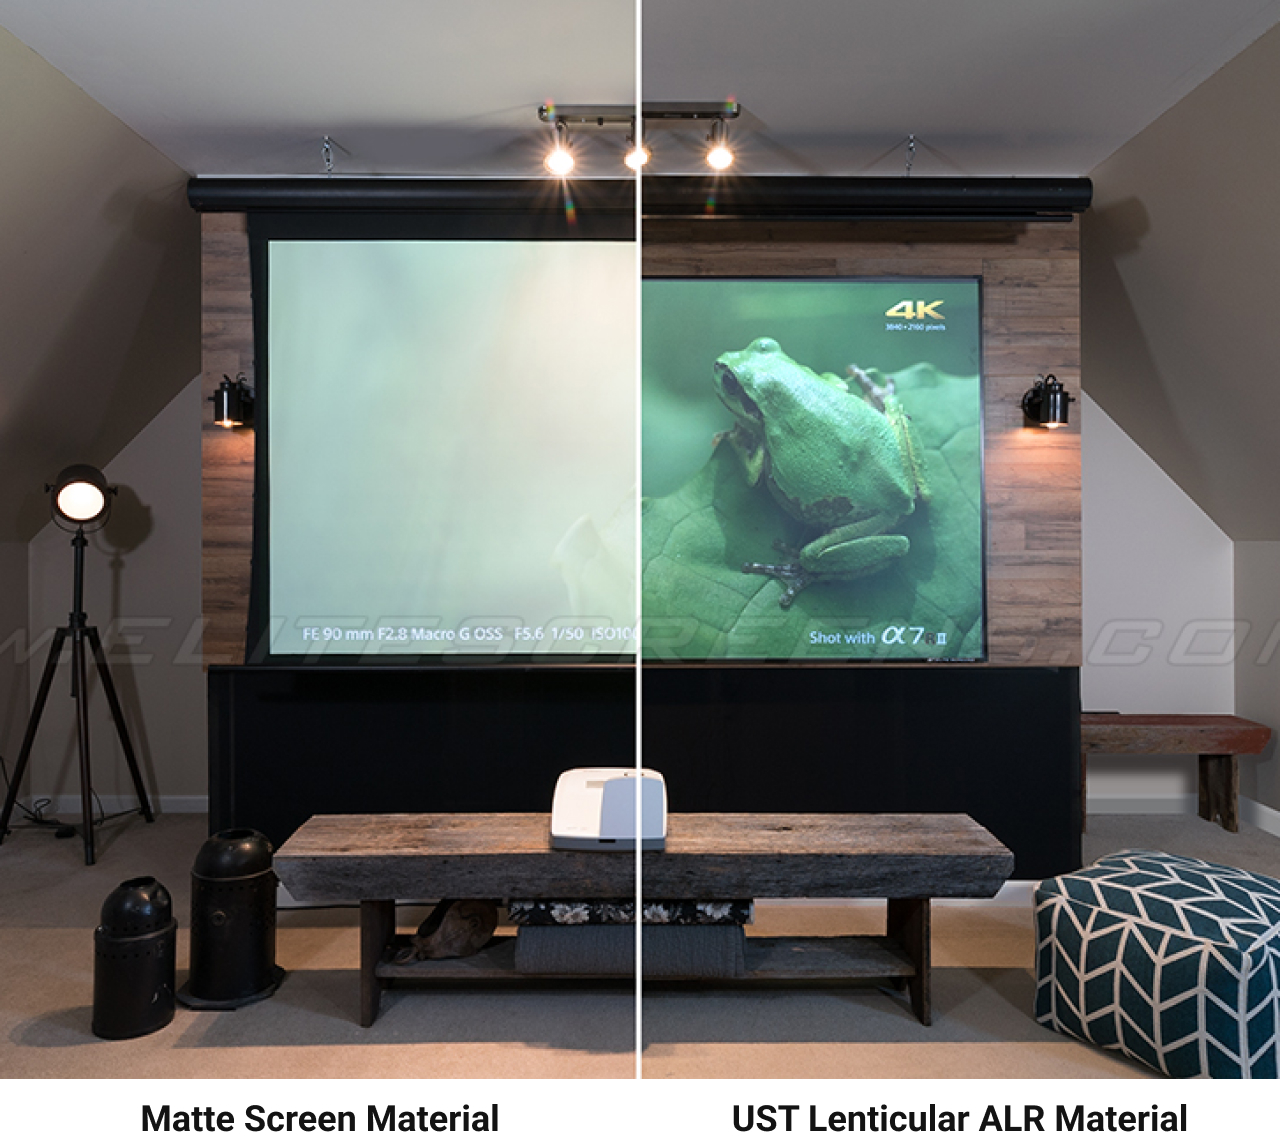 Matte screens vs Lenticular screens